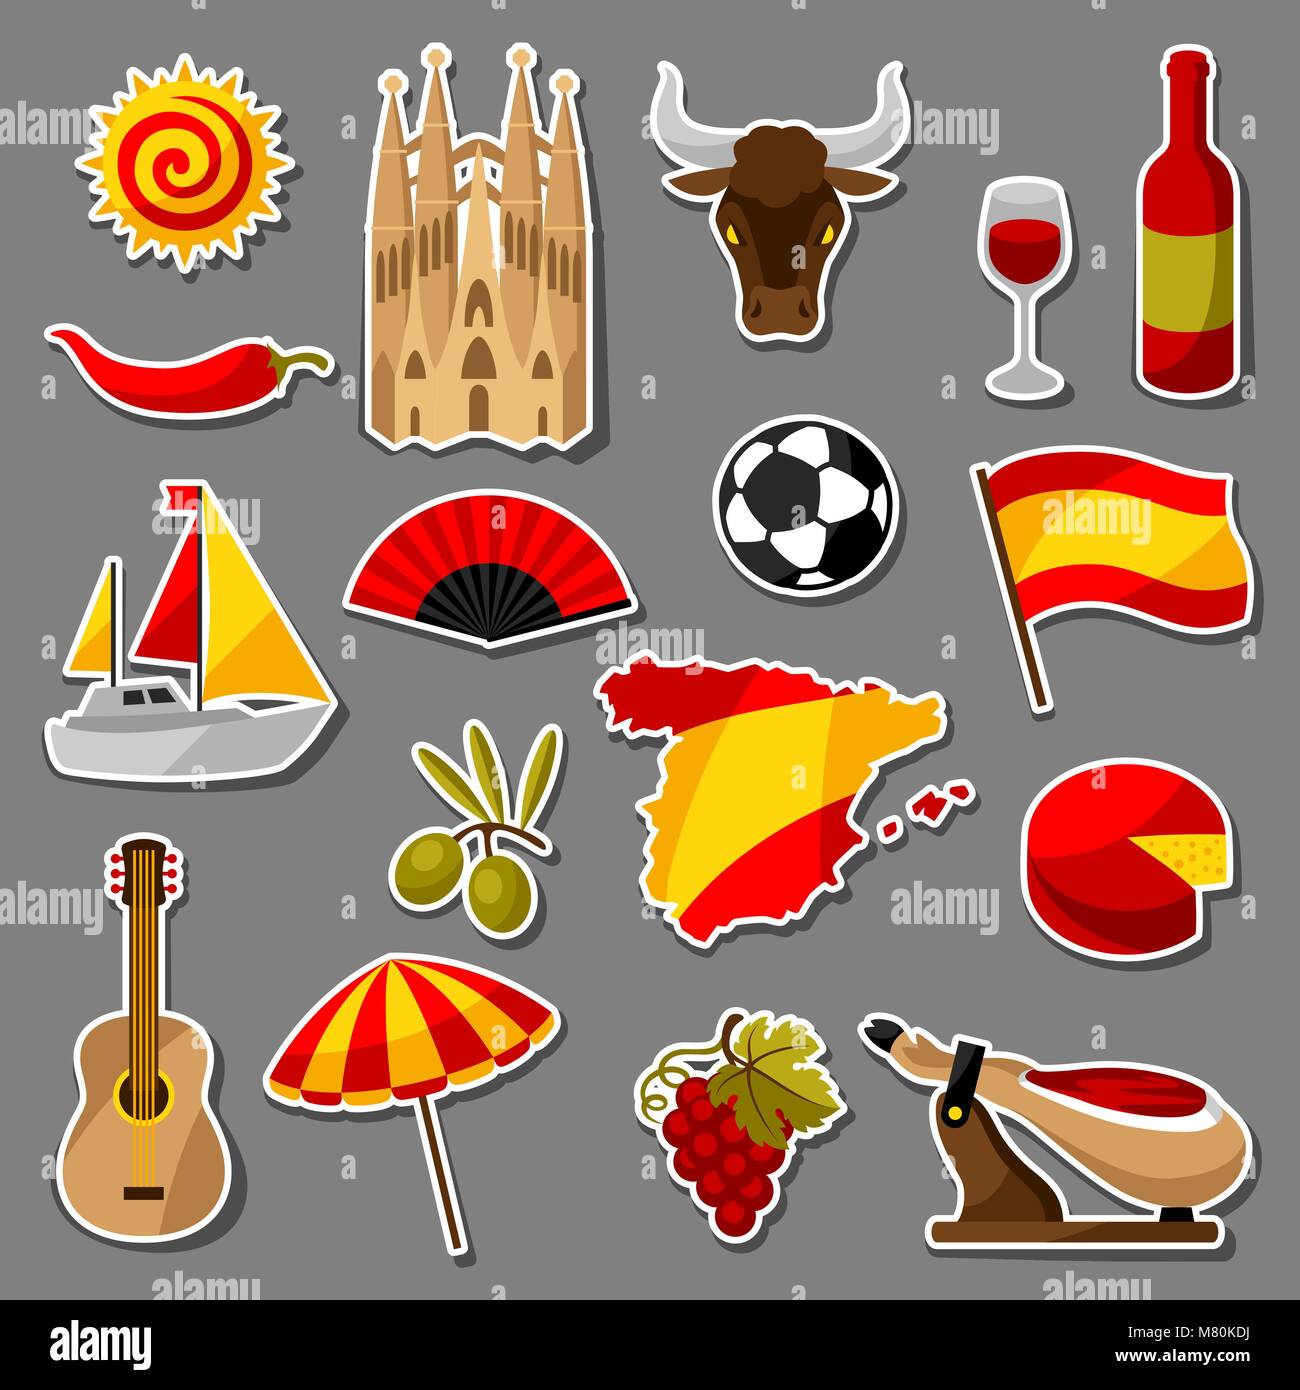 vreugde eenvoudig hoofdpijn Espagne sticker icons set. L'Espagnol symboles traditionnels et d'objets  Image Vectorielle Stock - Alamy